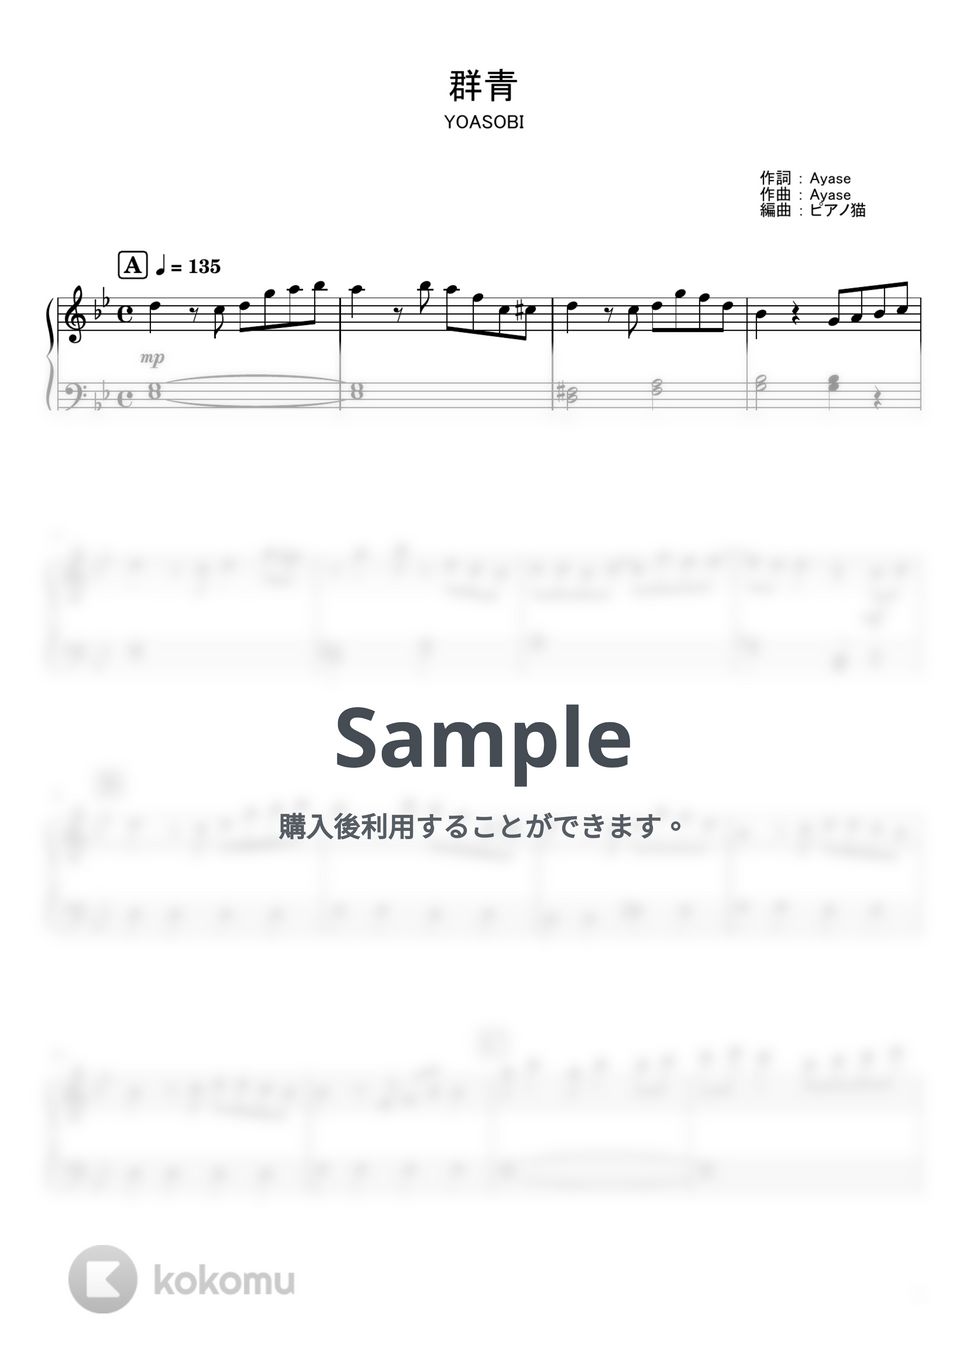 Ayase - 群青 (ピアノ,ソロ,楽譜,弾き語り,群青,YOASOBI,Ayase) by ピアノ猫